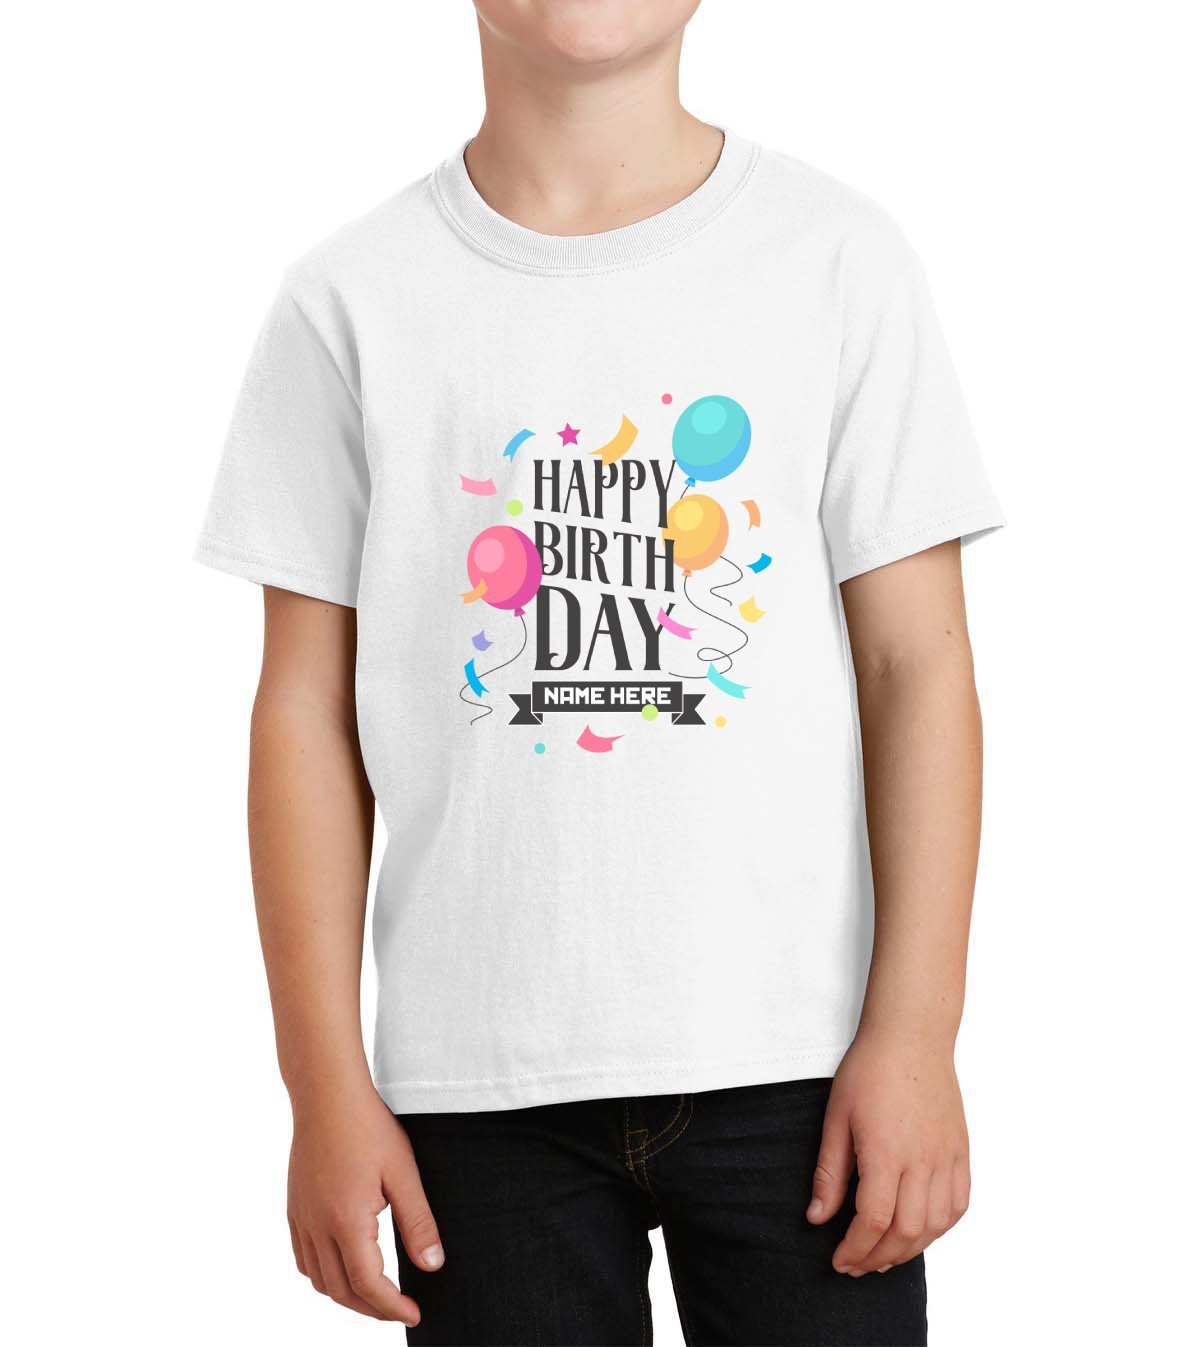 Happy B-Day White Cotton T-shirt Kids